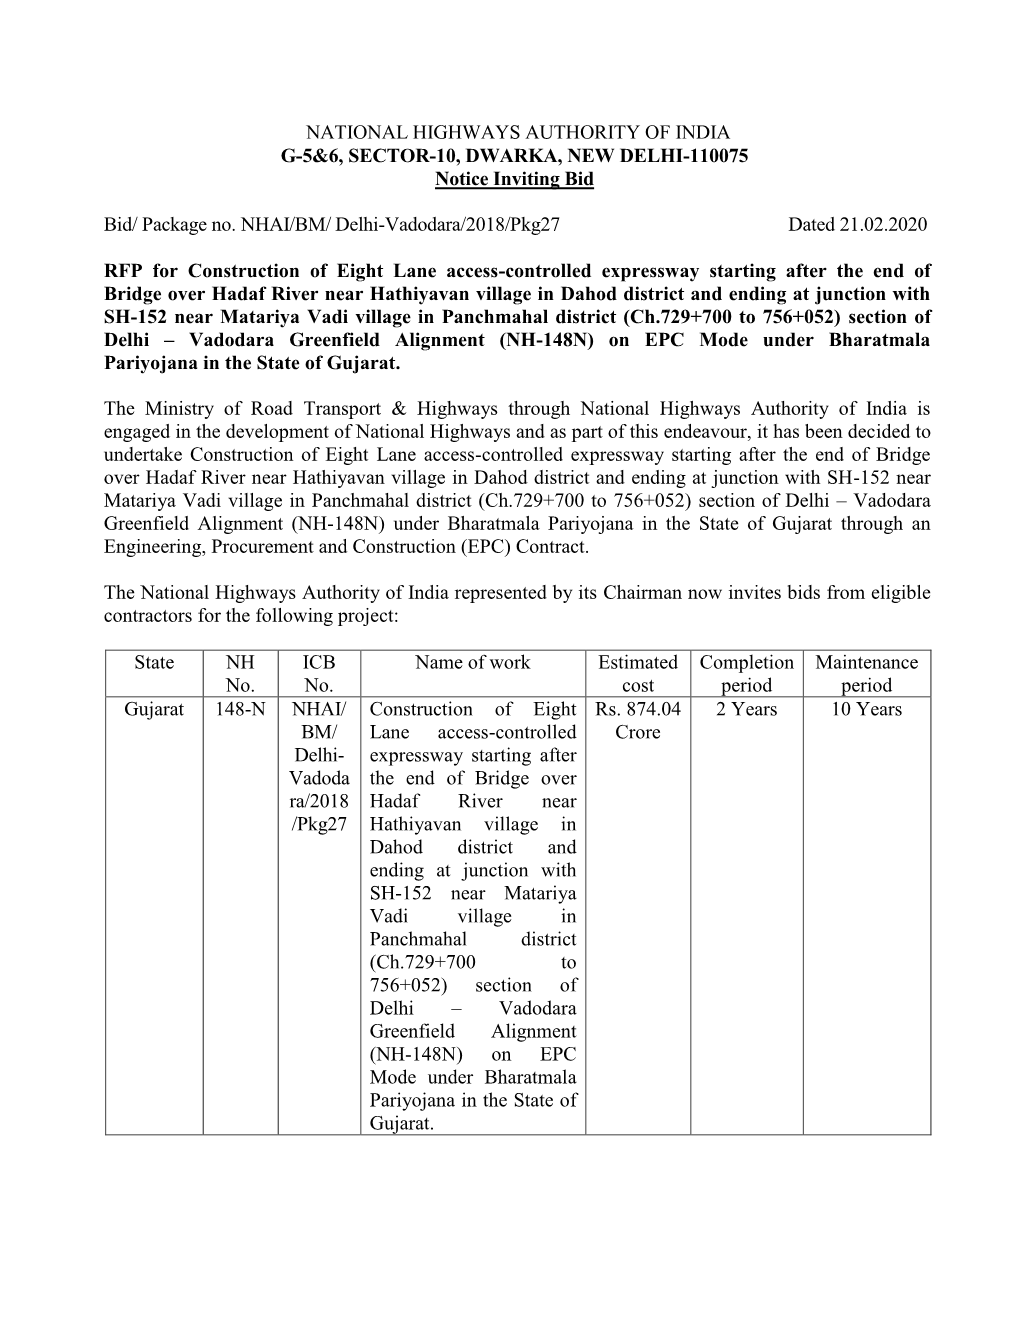 NATIONAL HIGHWAYS AUTHORITY of INDIA G-5&6, SECTOR-10, DWARKA, NEW DELHI-110075 Notice Inviting Bid Bid/ Package No. NHAI/BM